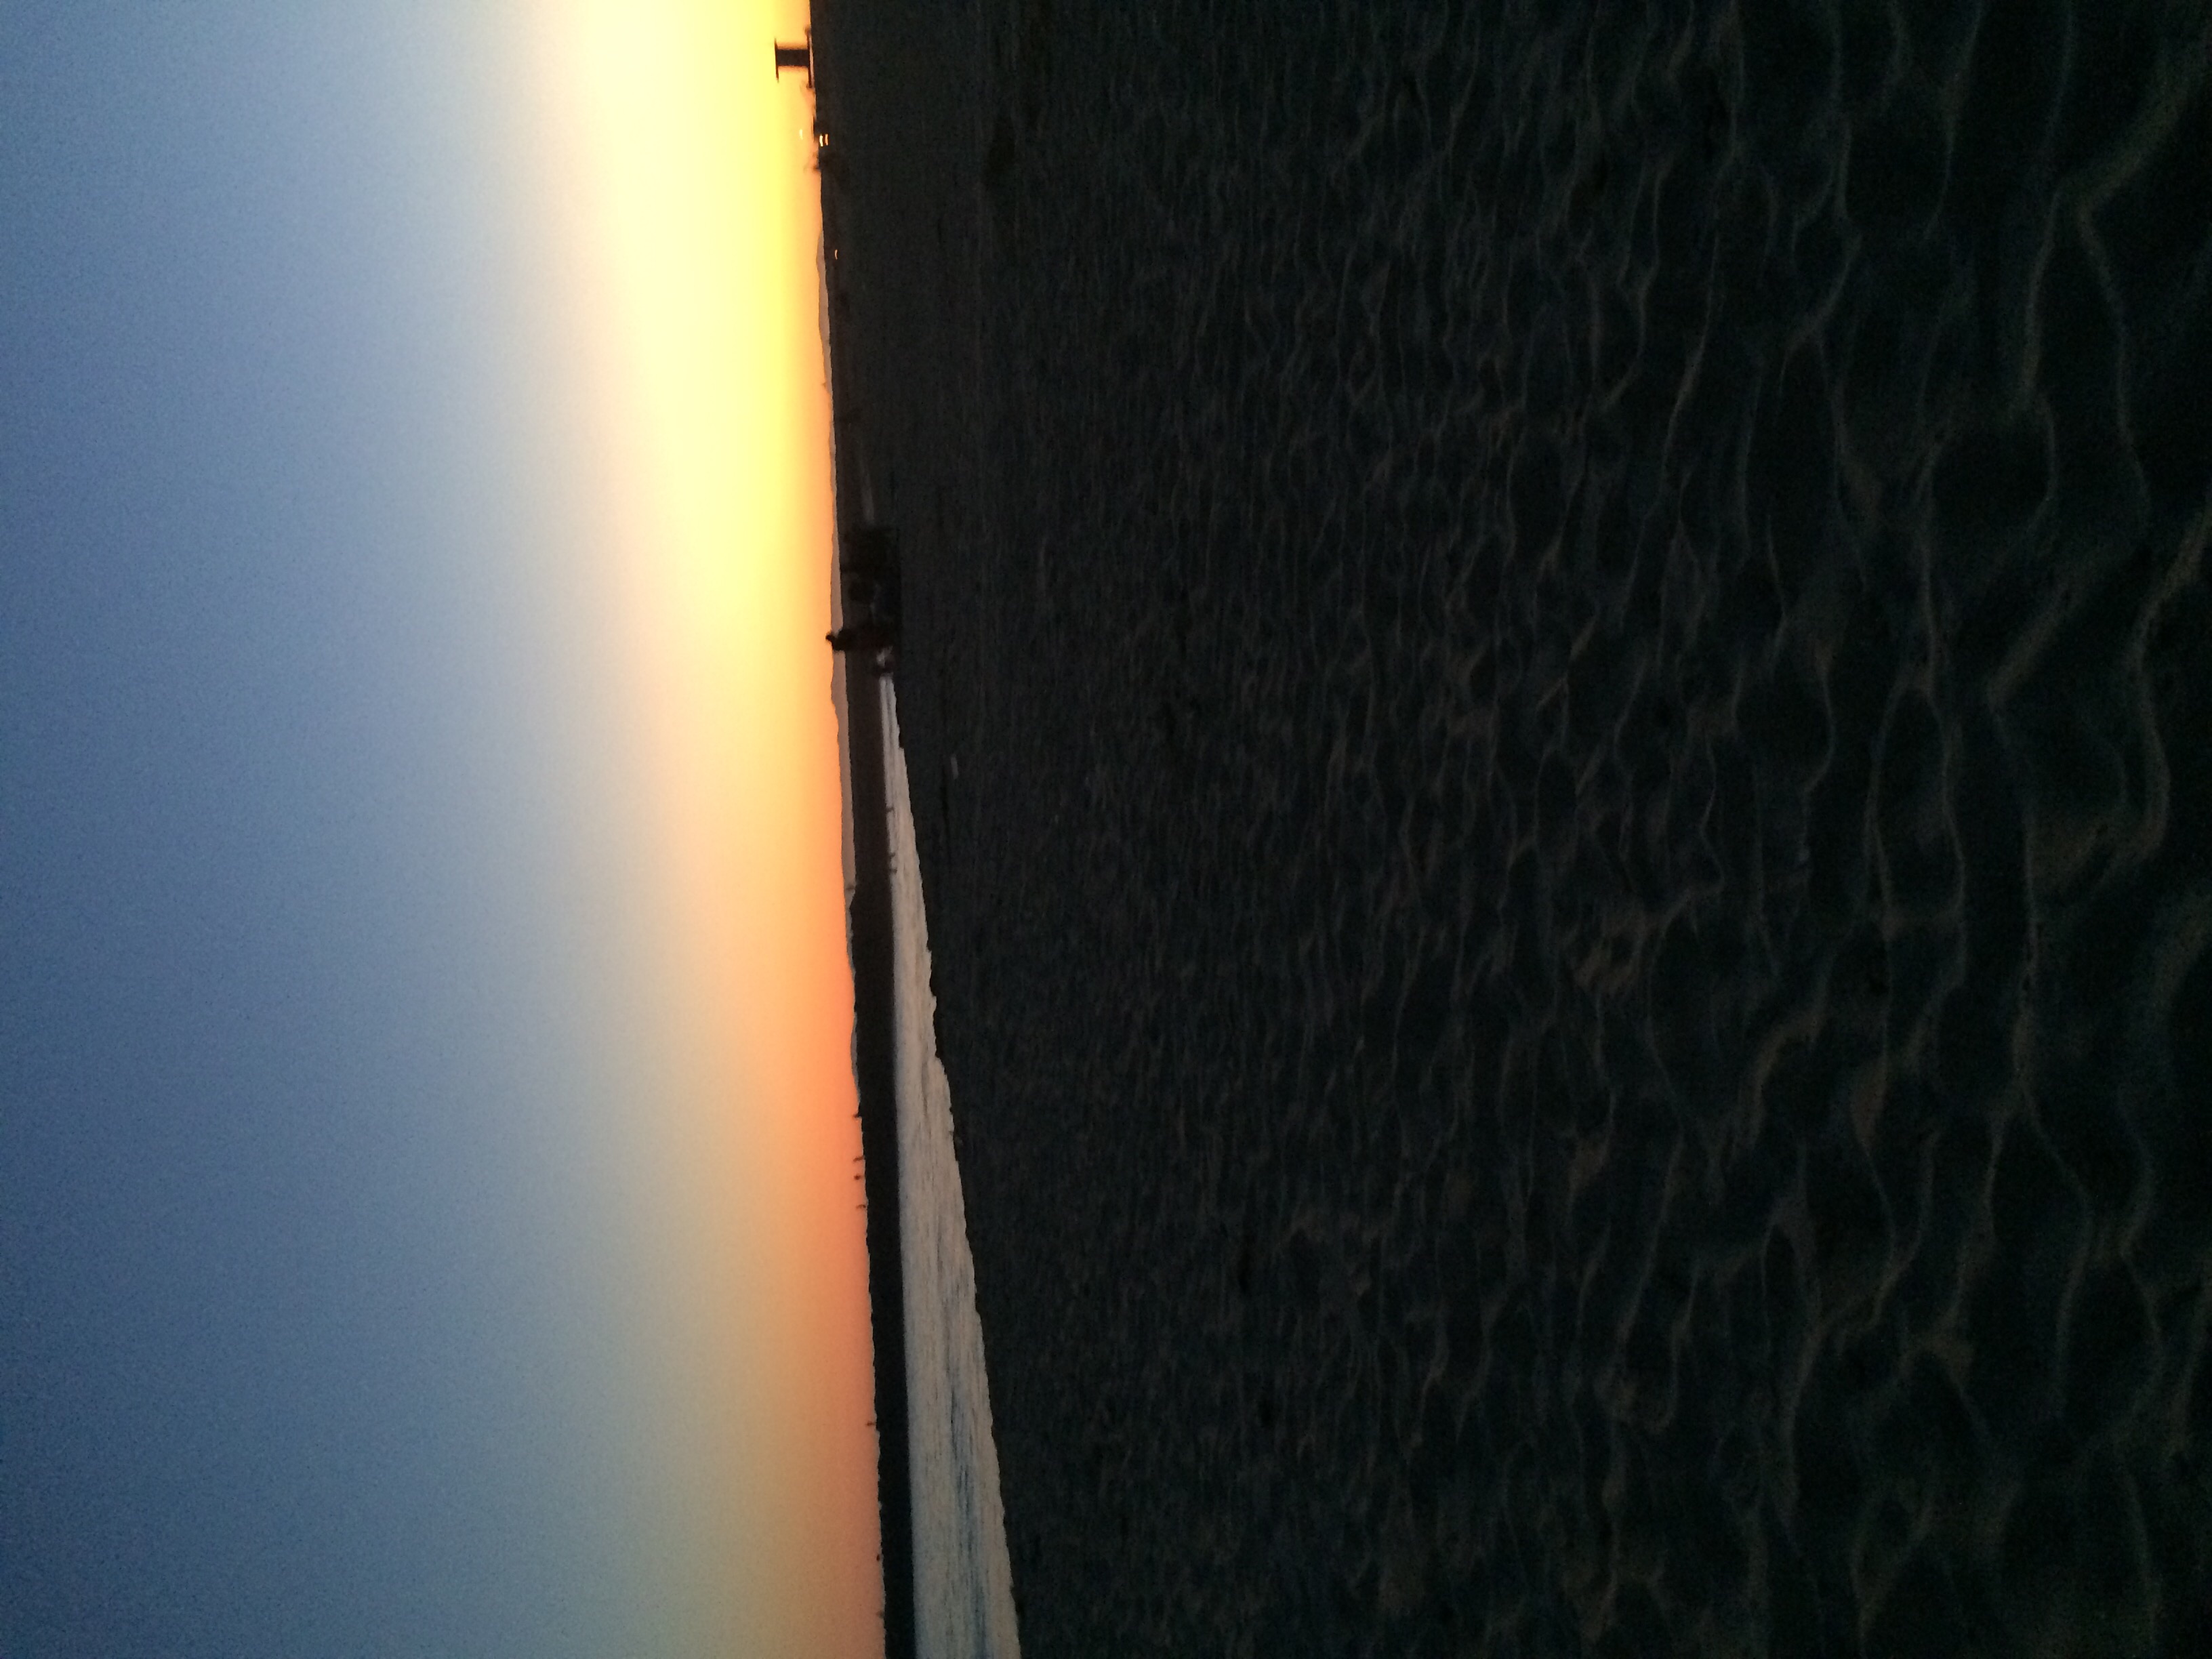  Sunset bờ biển, bãi biển